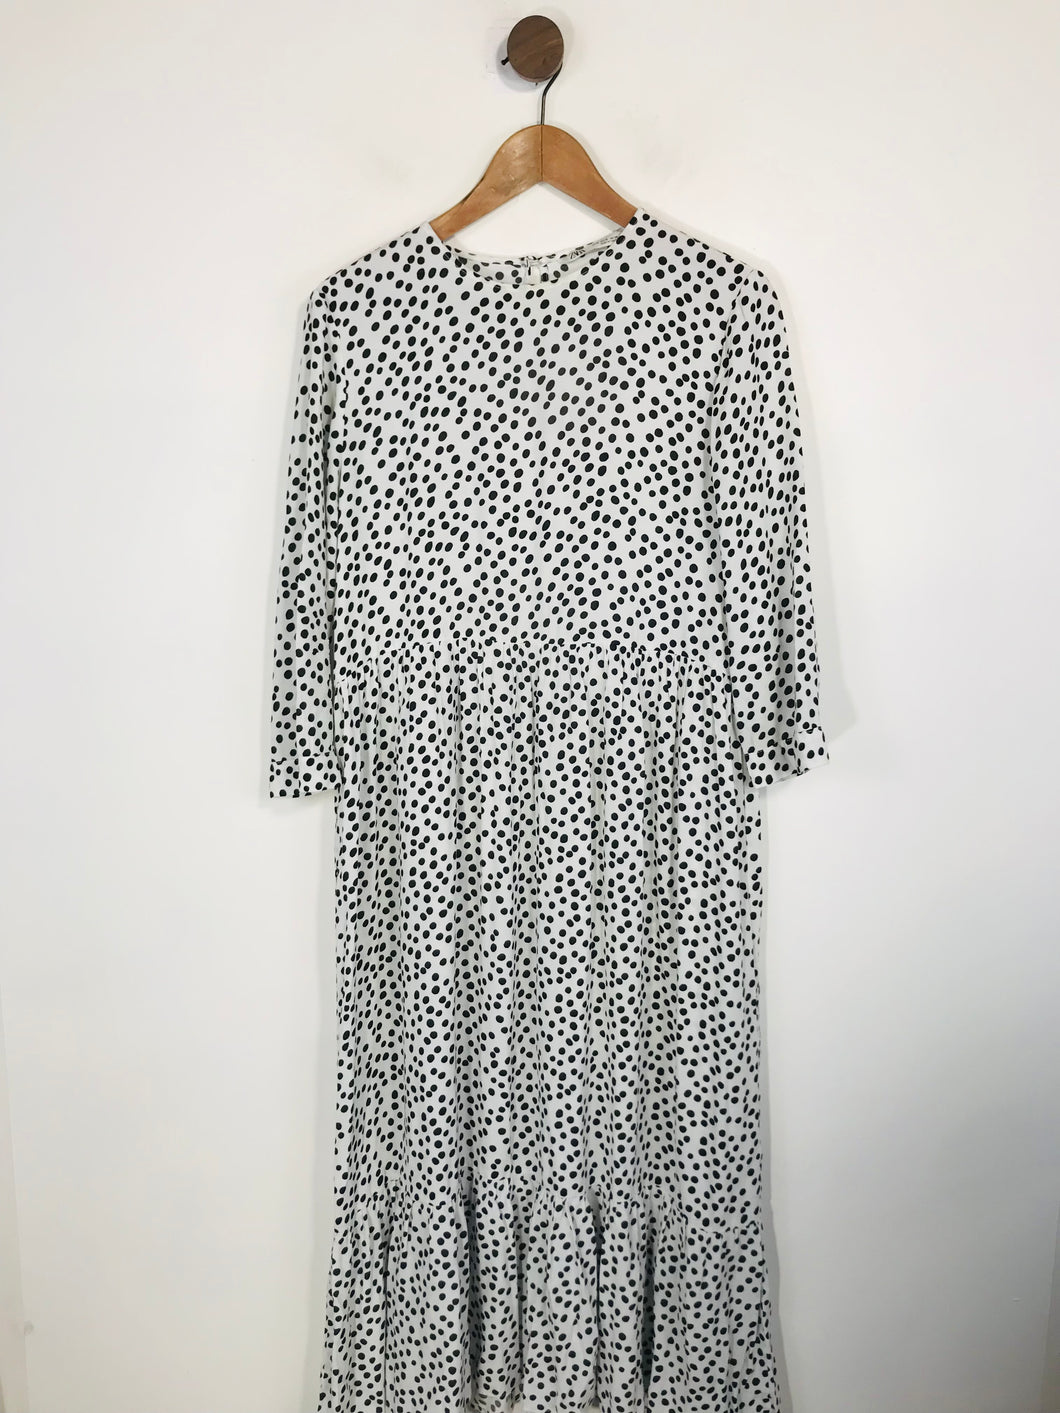 Zara Women's Polka Dot Gathered Maxi Dress | M UK10-12 | White